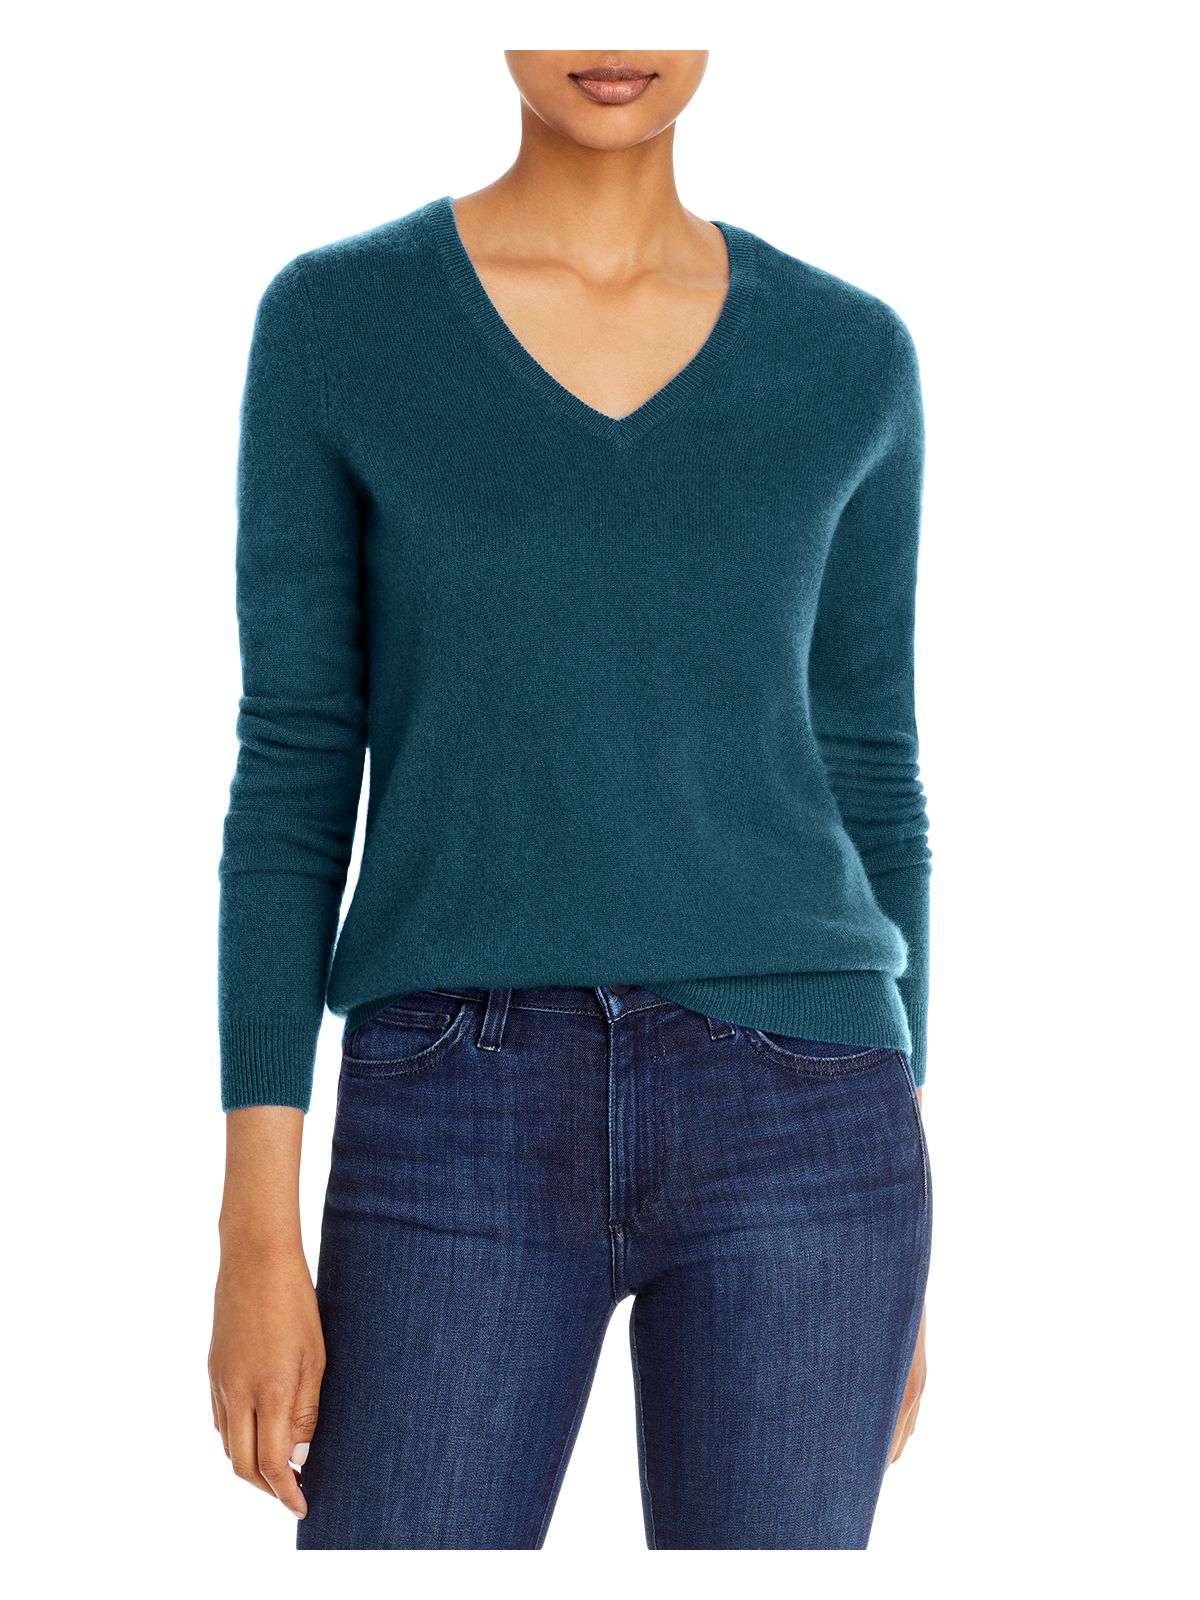 Designer Brand Womens Teal Cashmere Heather Long Sleeve V Neck Sweater XL